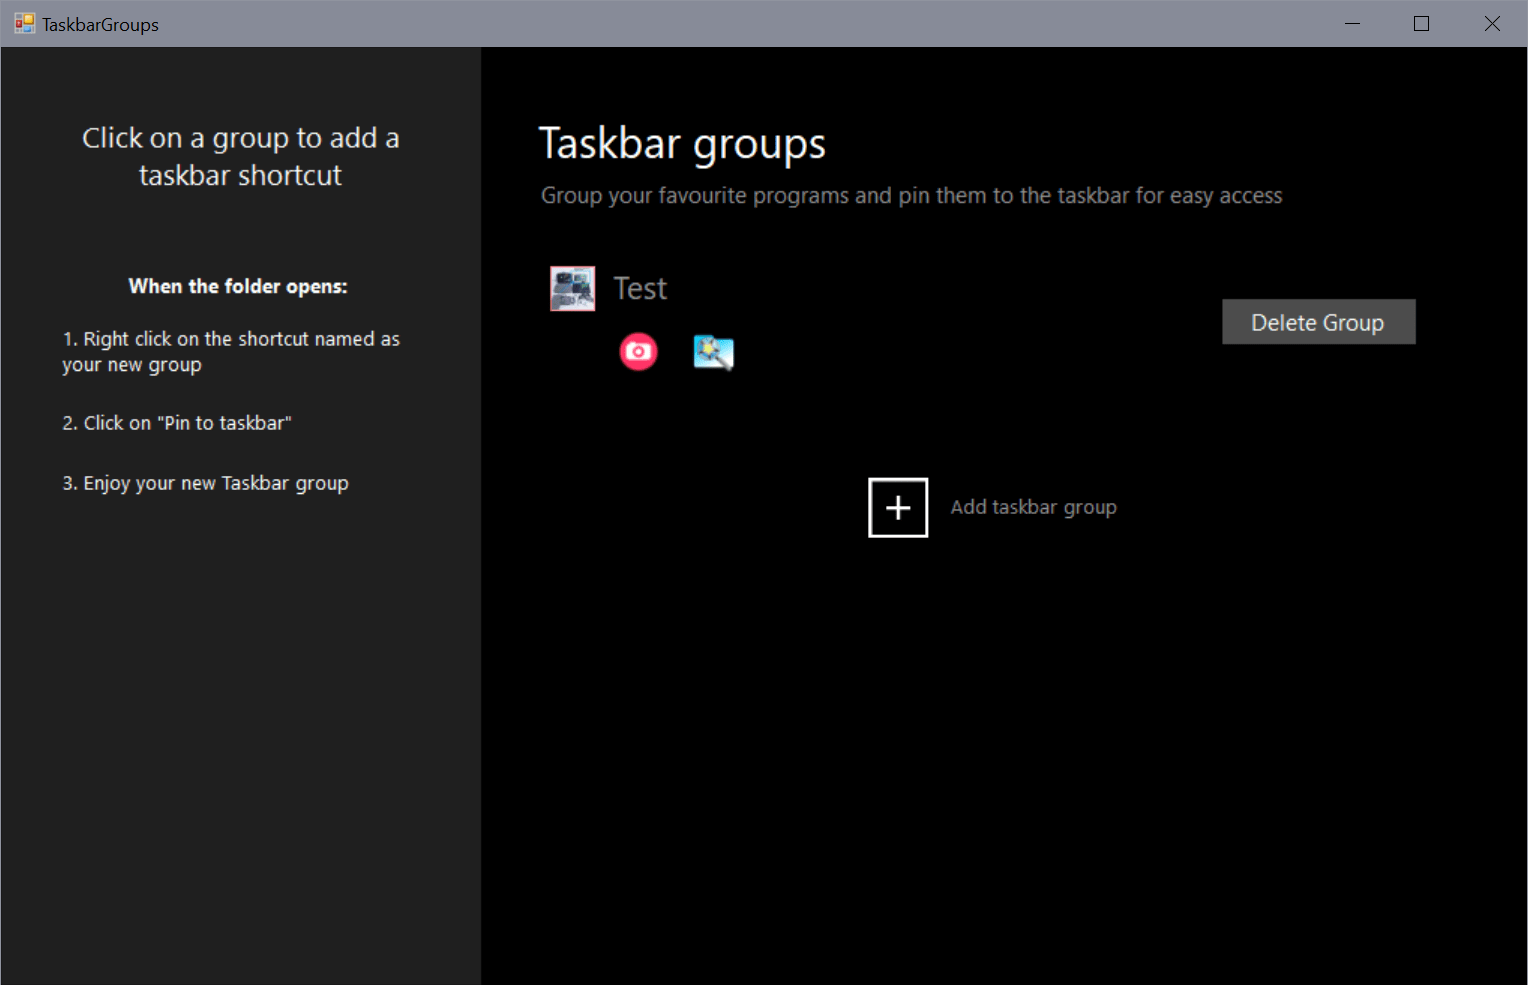 Taskbar Groups allows you to pin groups of apps to the taskbar on Windows 10